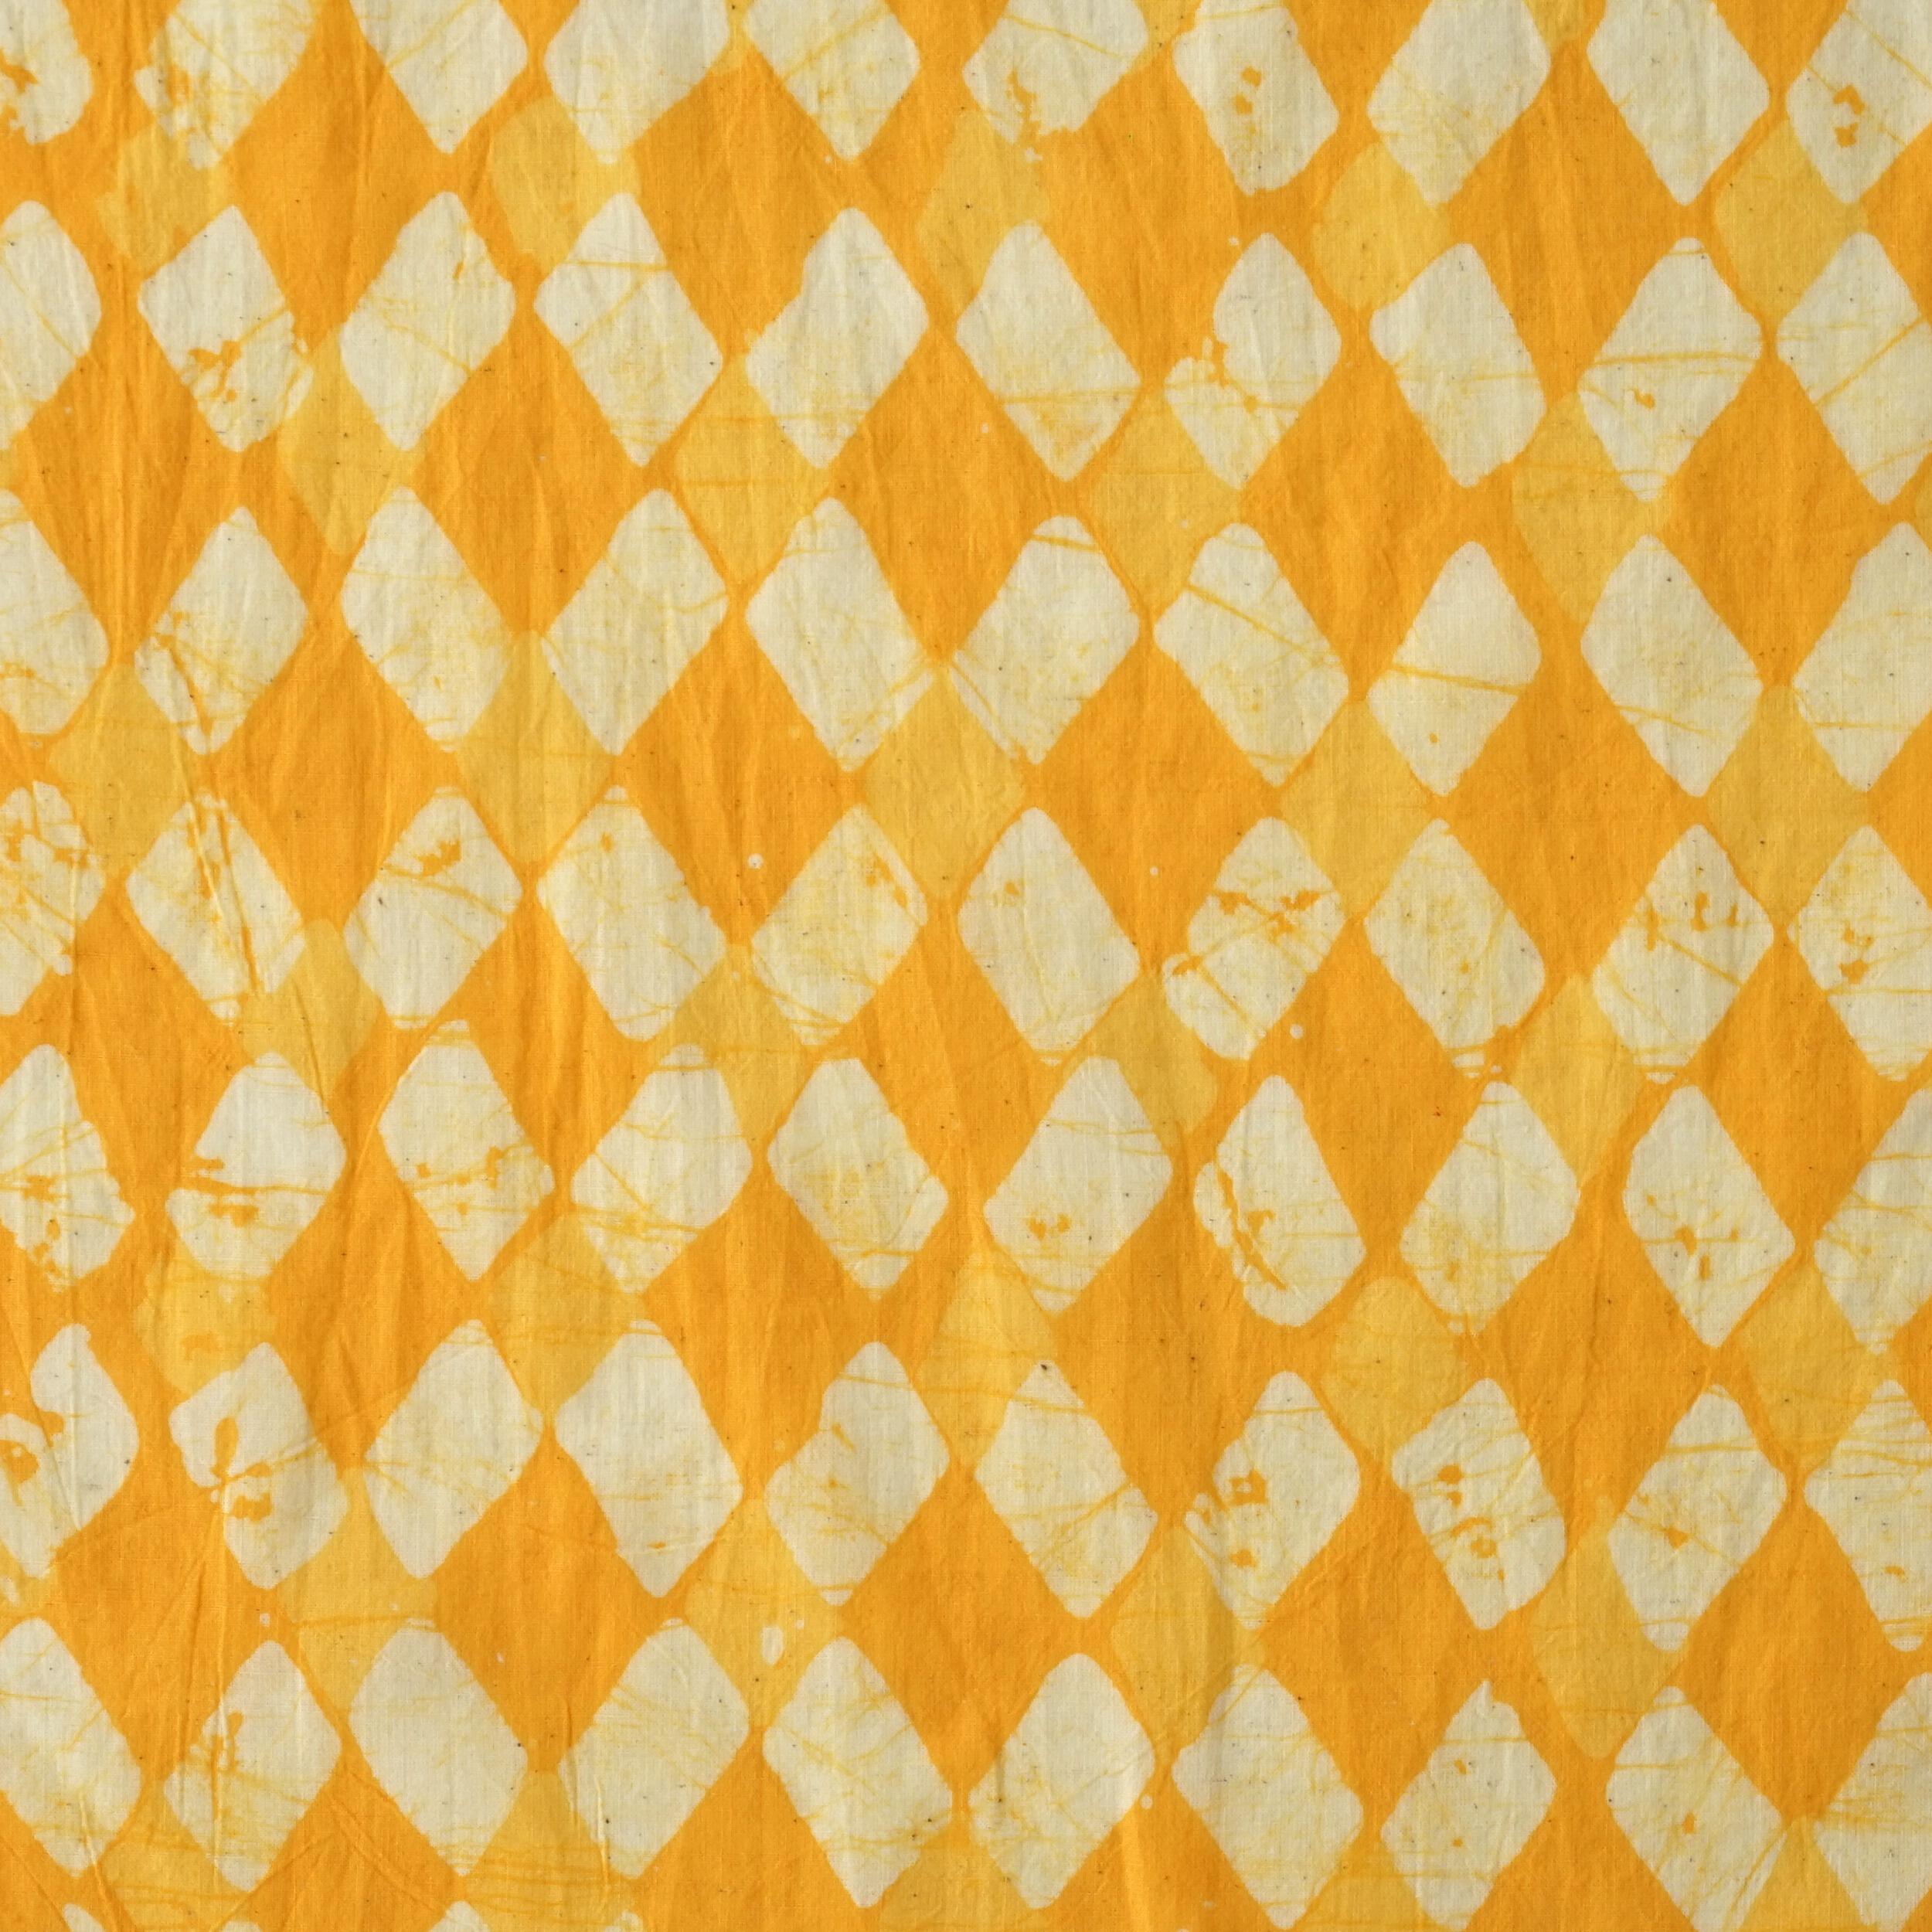 100% Block-Printed Batik Cotton Fabric From India - Modernista Design - Yellow Dye - Flat